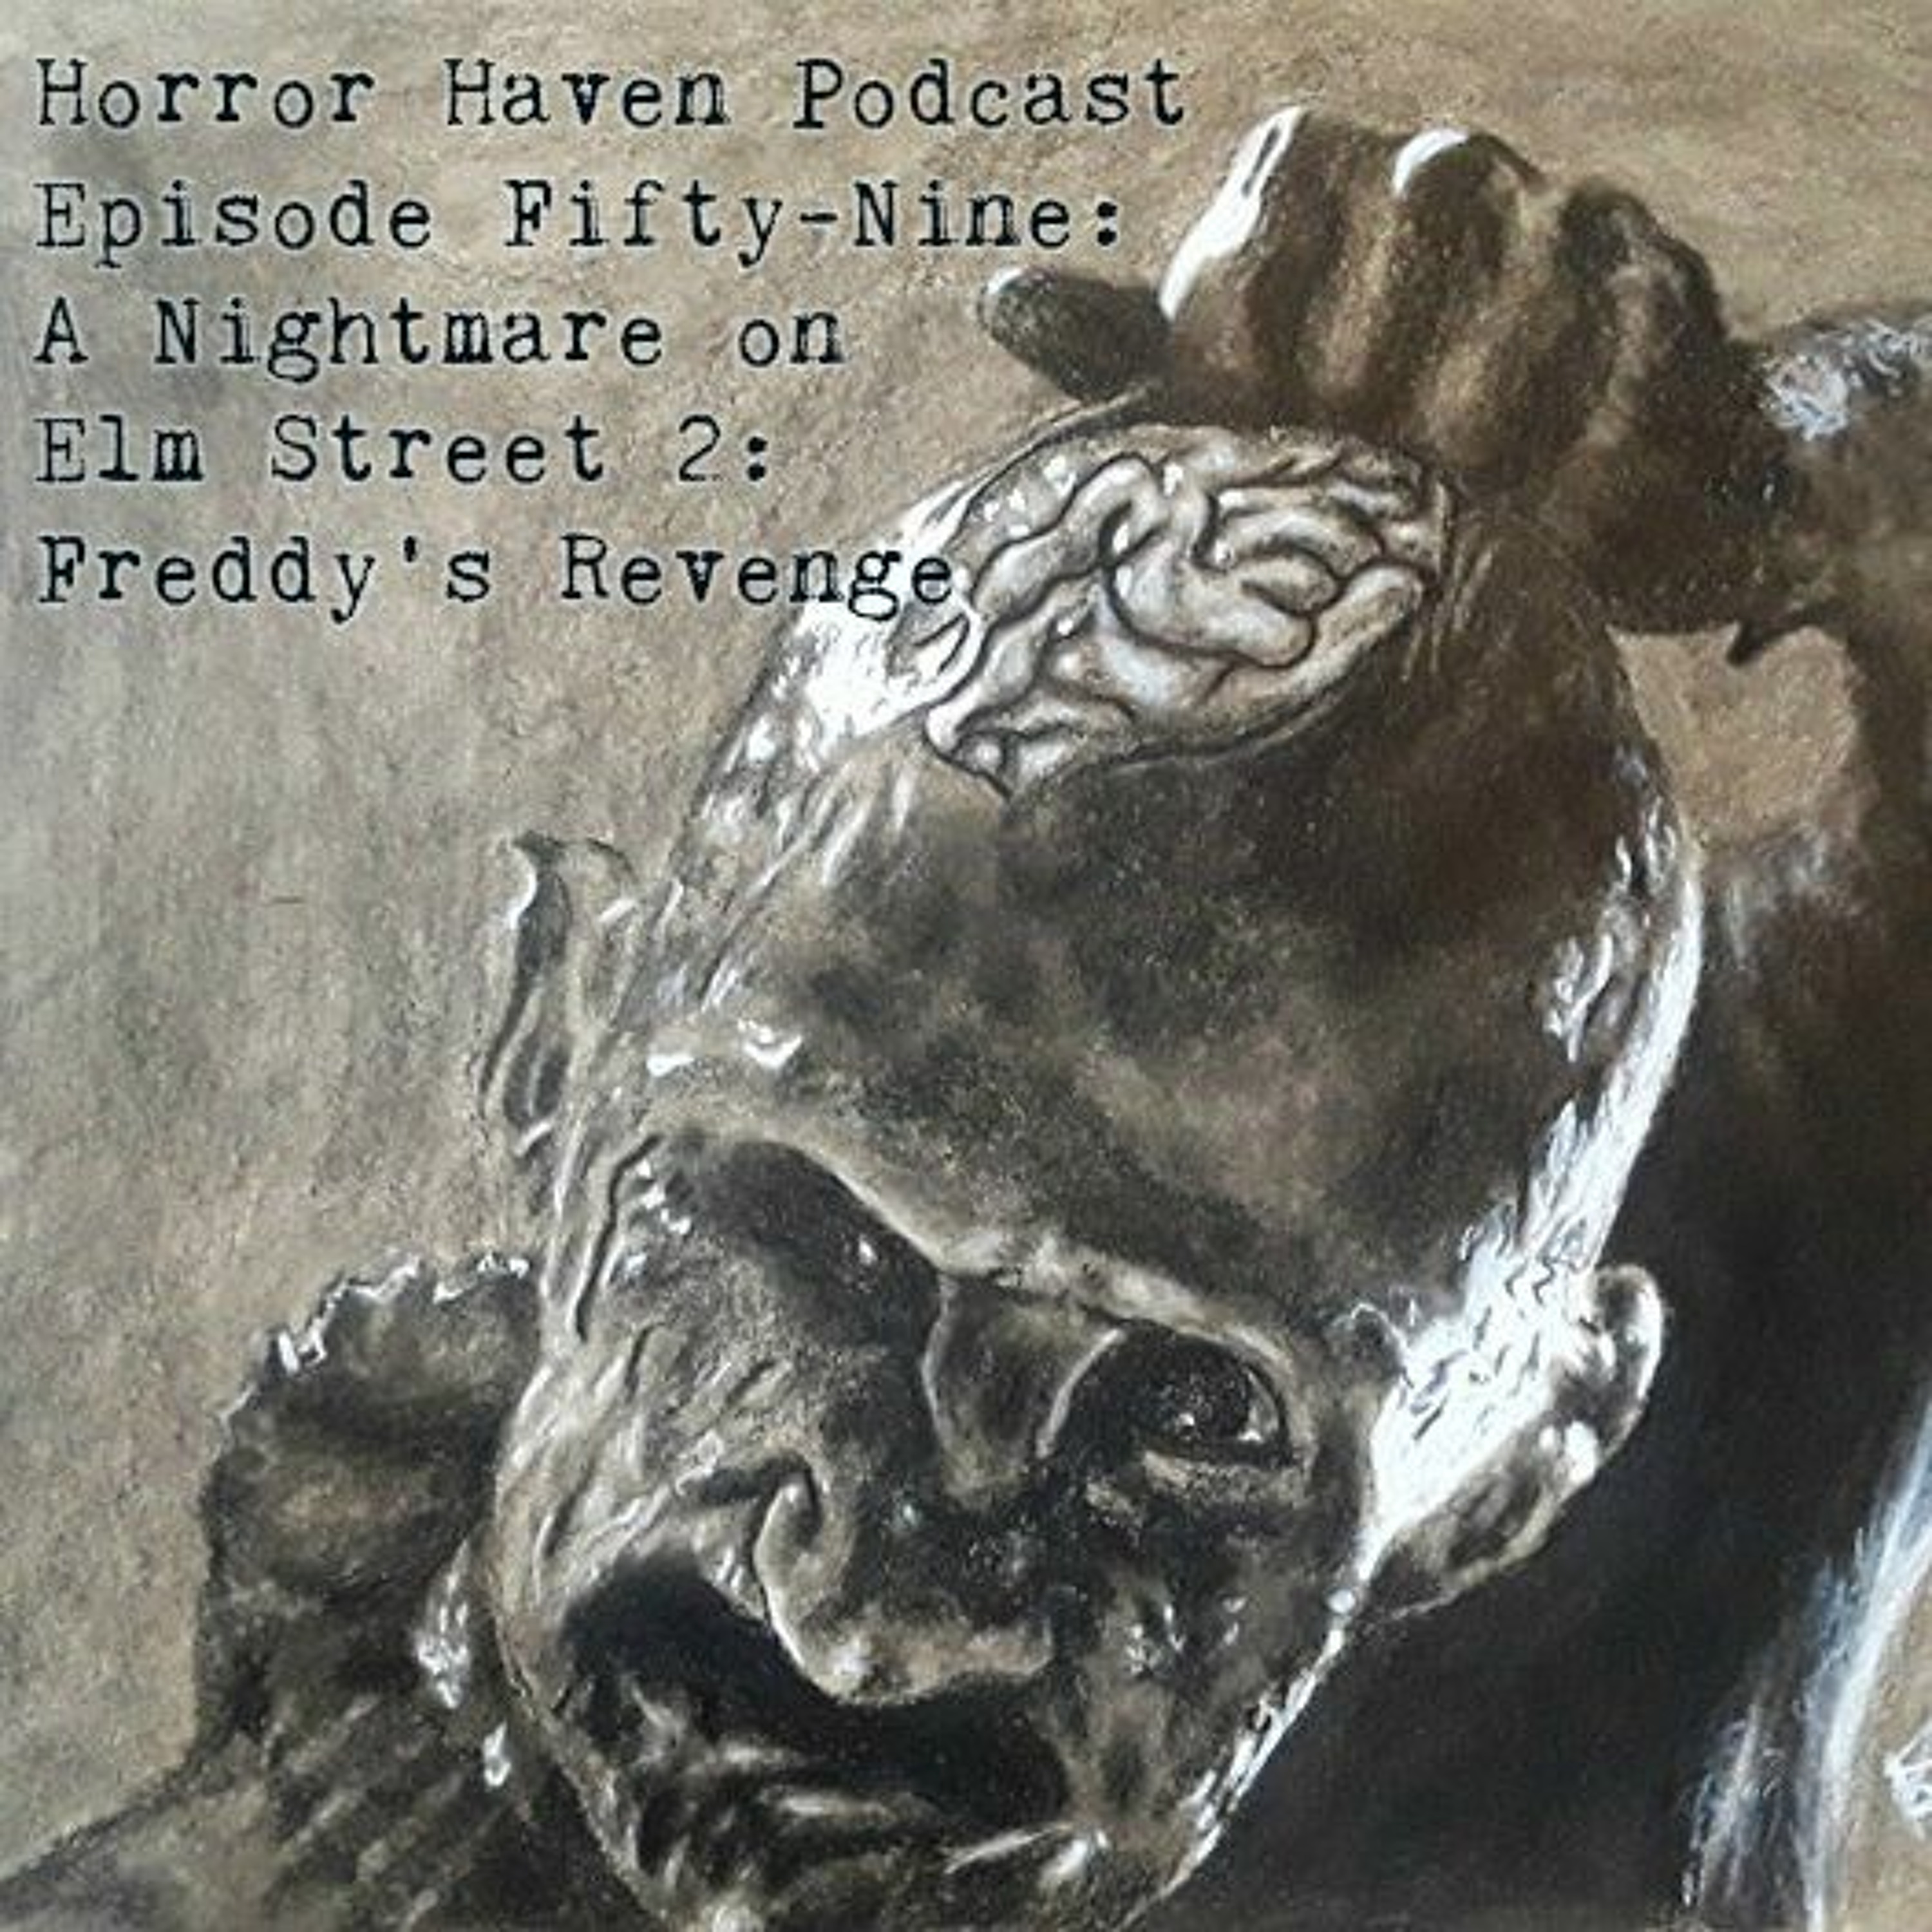 Episode Fifty-Nine:  A Nightmare on Elm Street 2: Freddy's Revenge